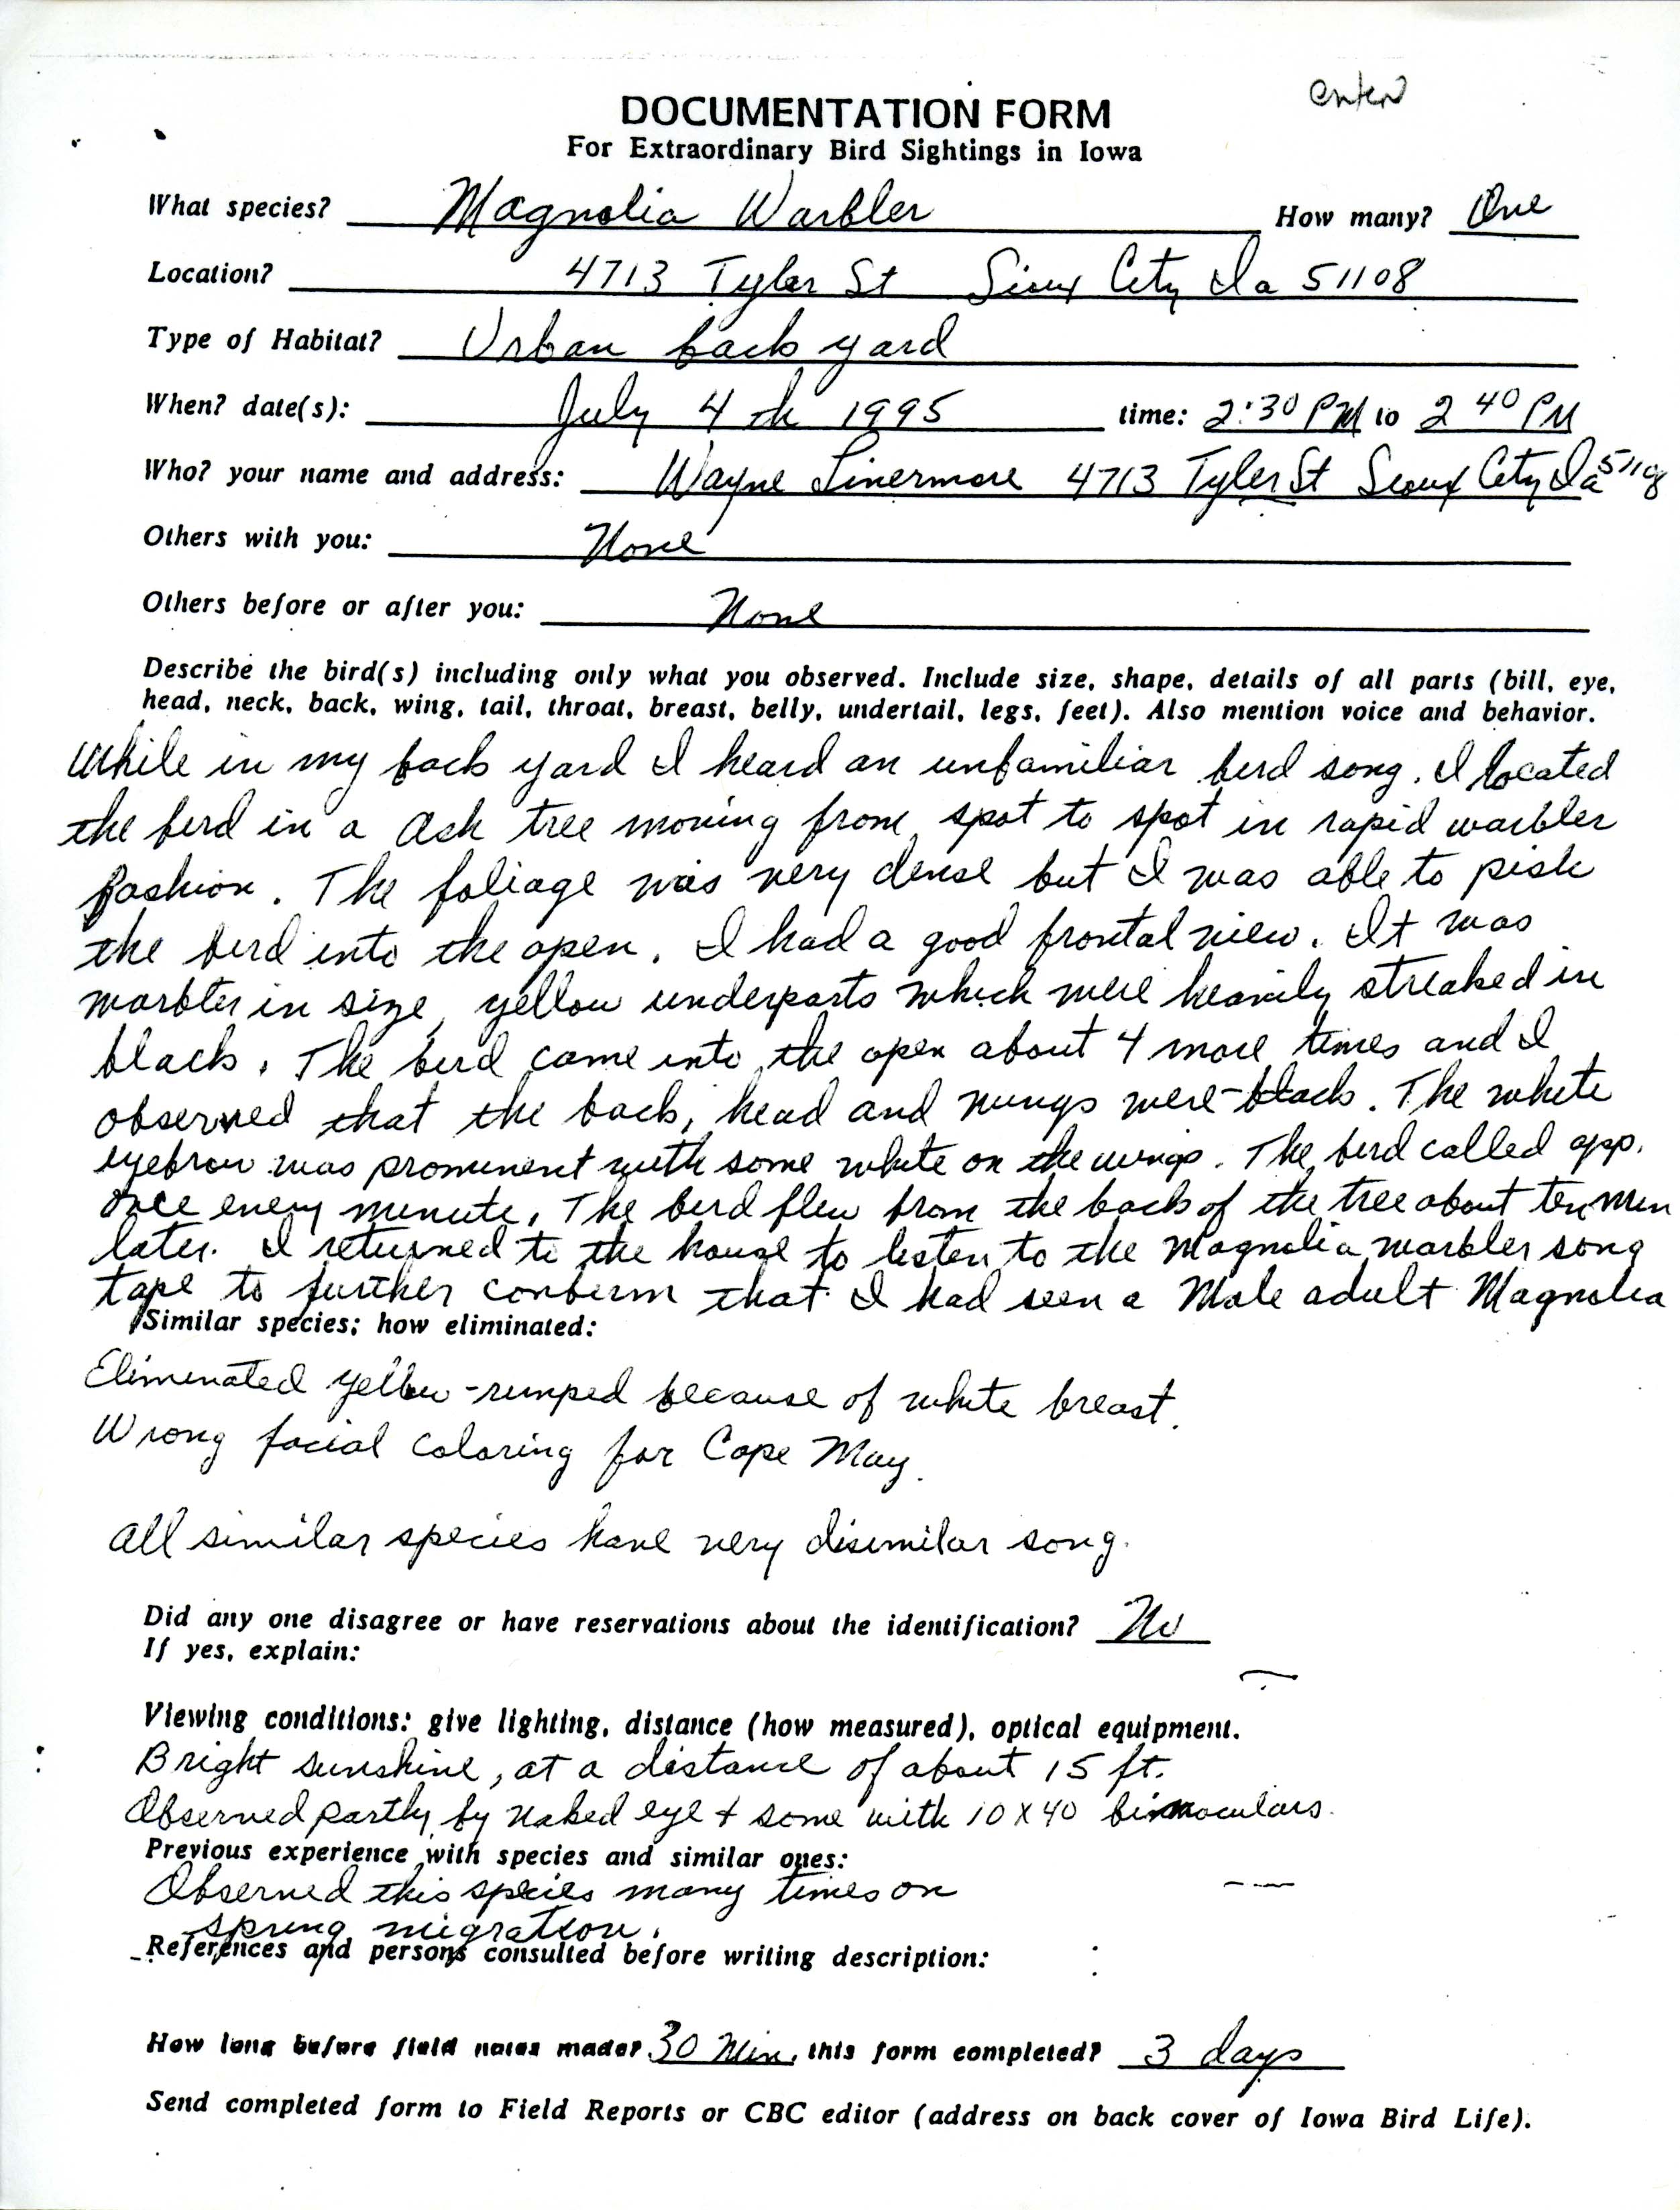 Documentation form for extraordinary bird sightings in Iowa, Magnolia Warbler, July 4, 1995, Wayne Livermore